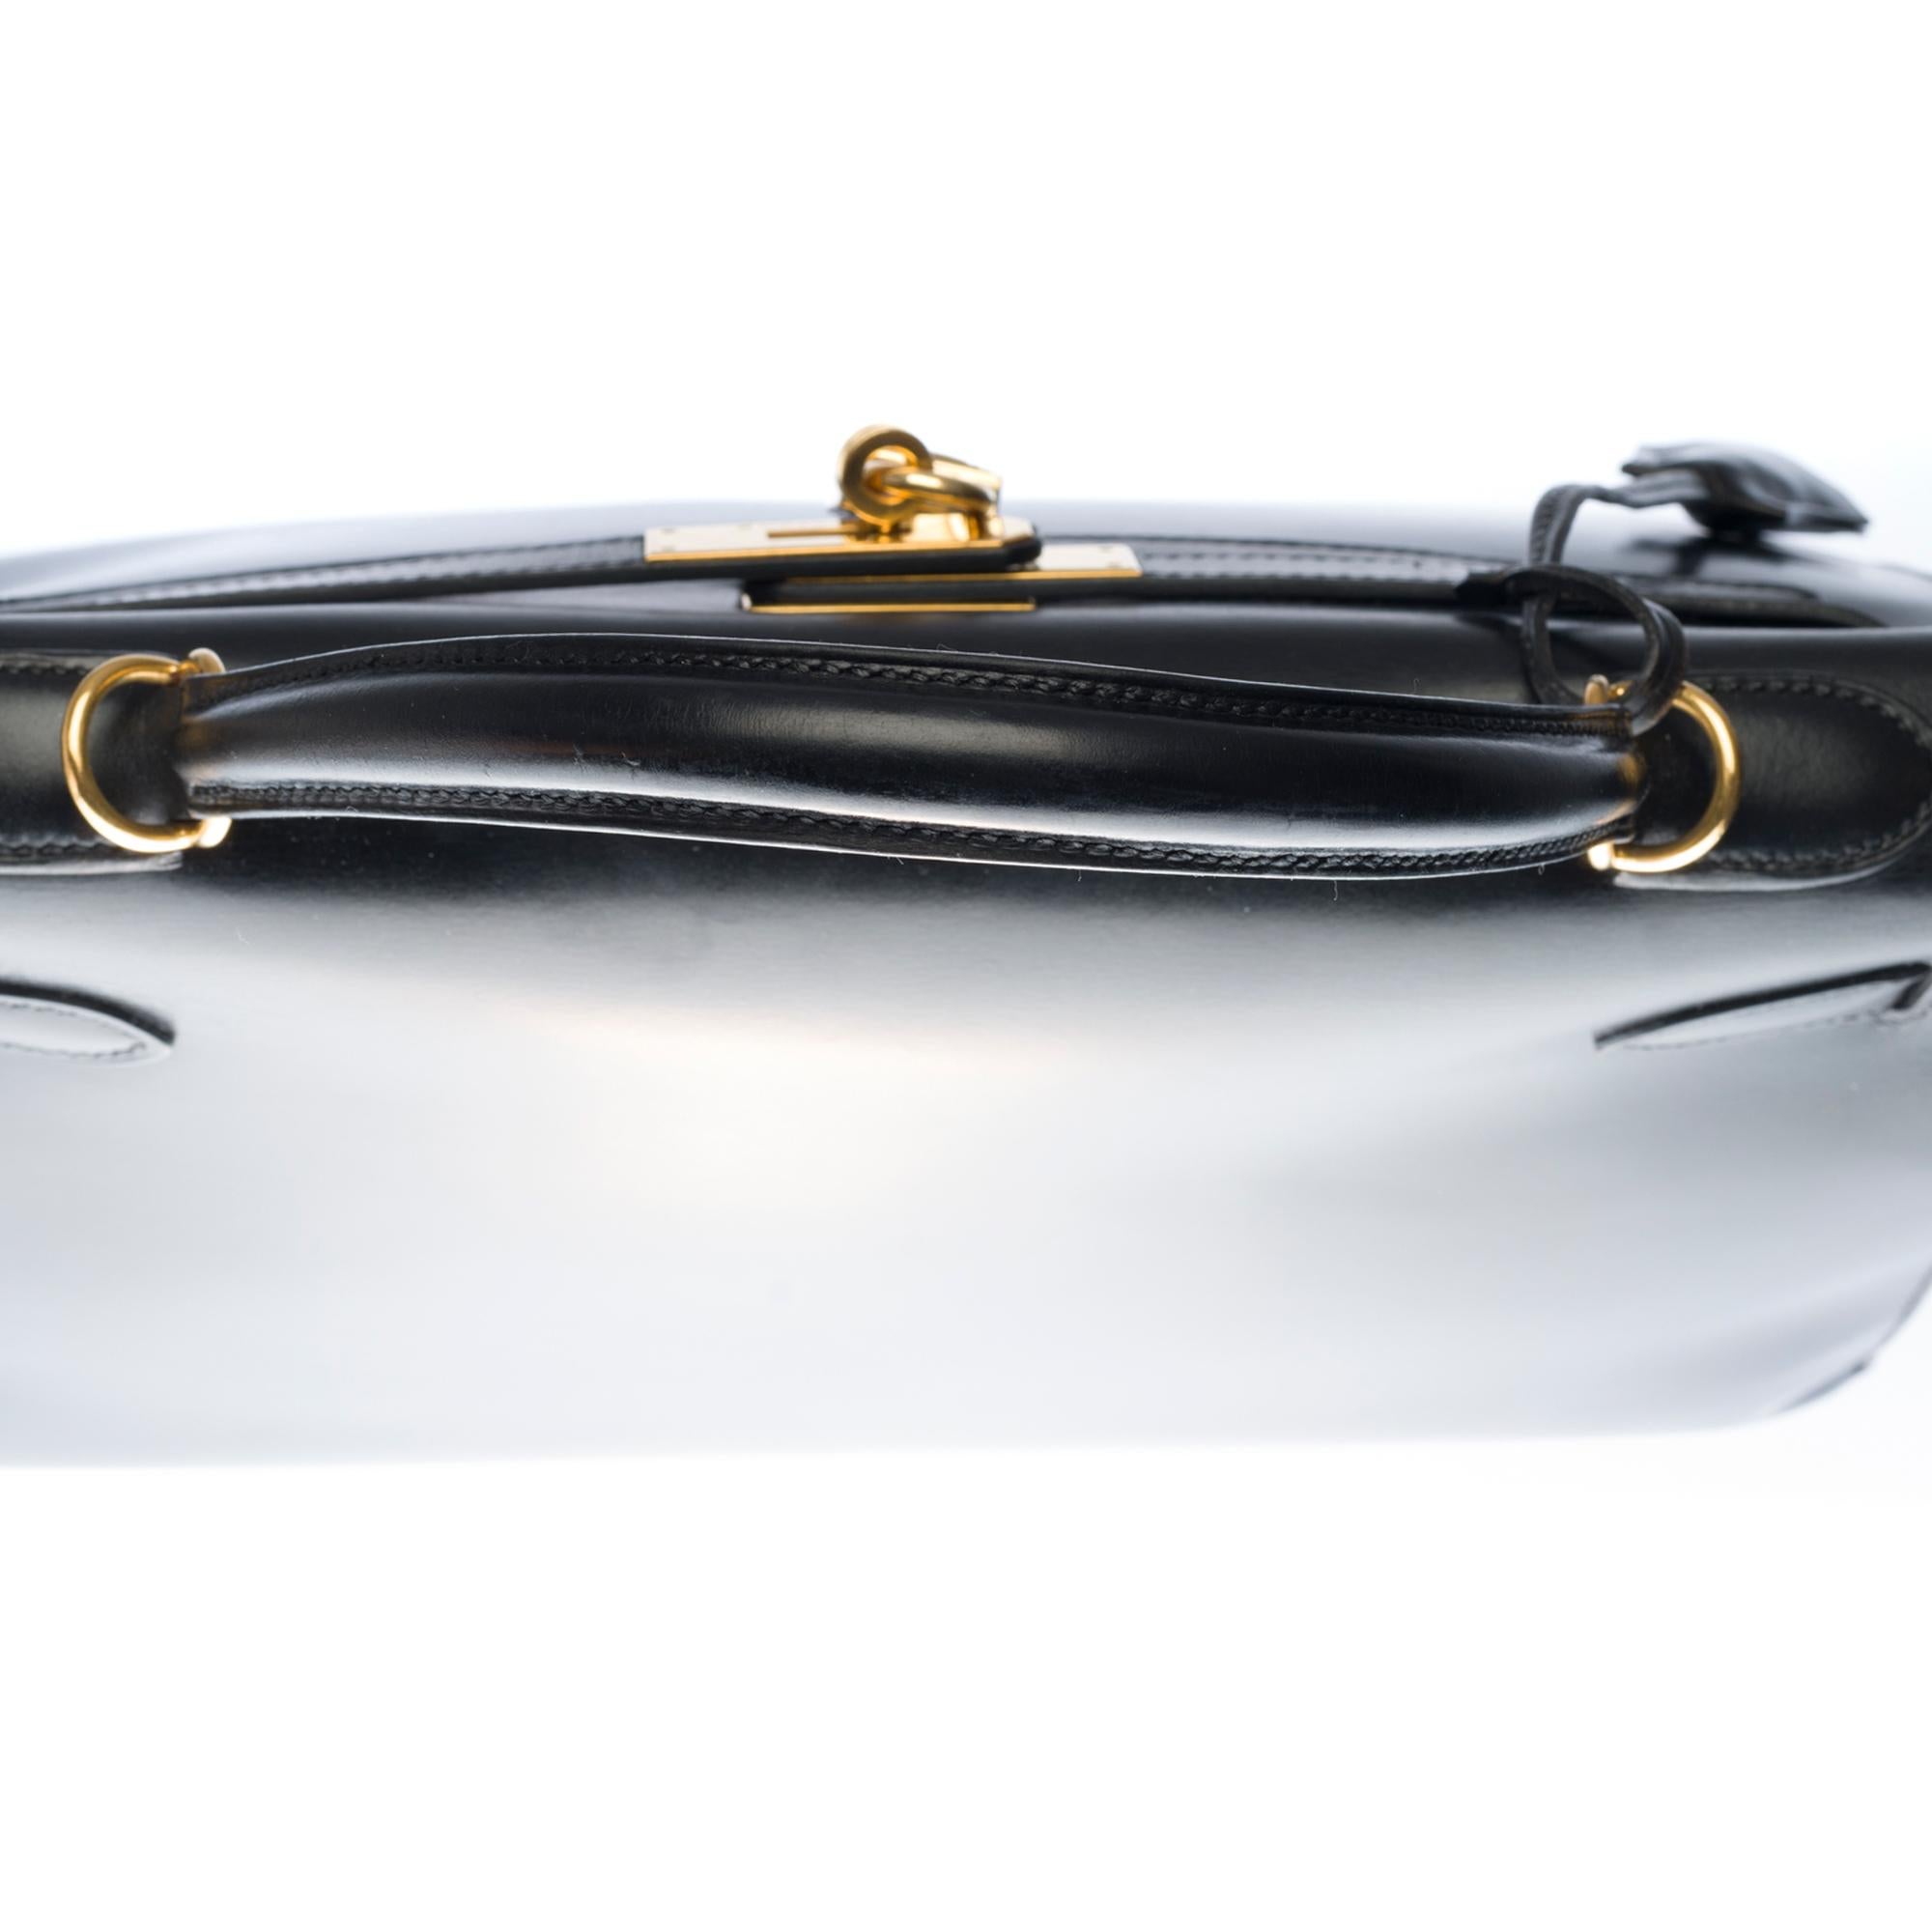 Hermès Kelly 32 handbag with strap in black box calfskin leather, GHW 1